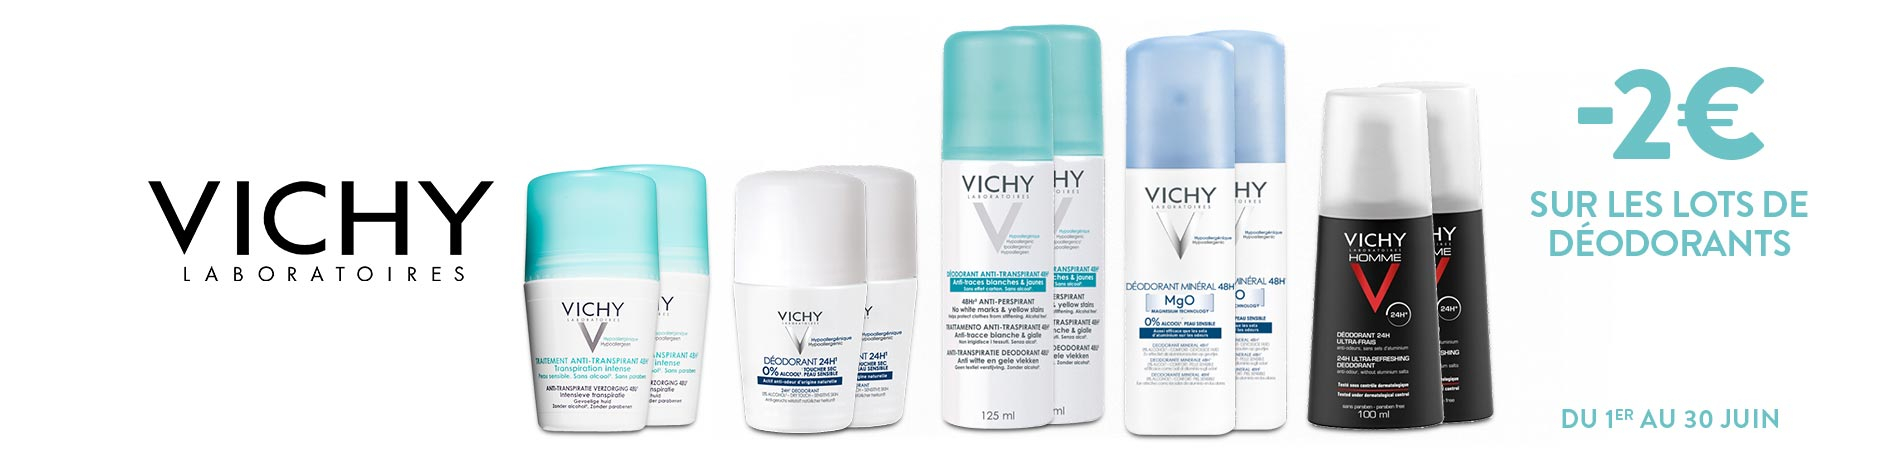 Promotion Vichy déodorants